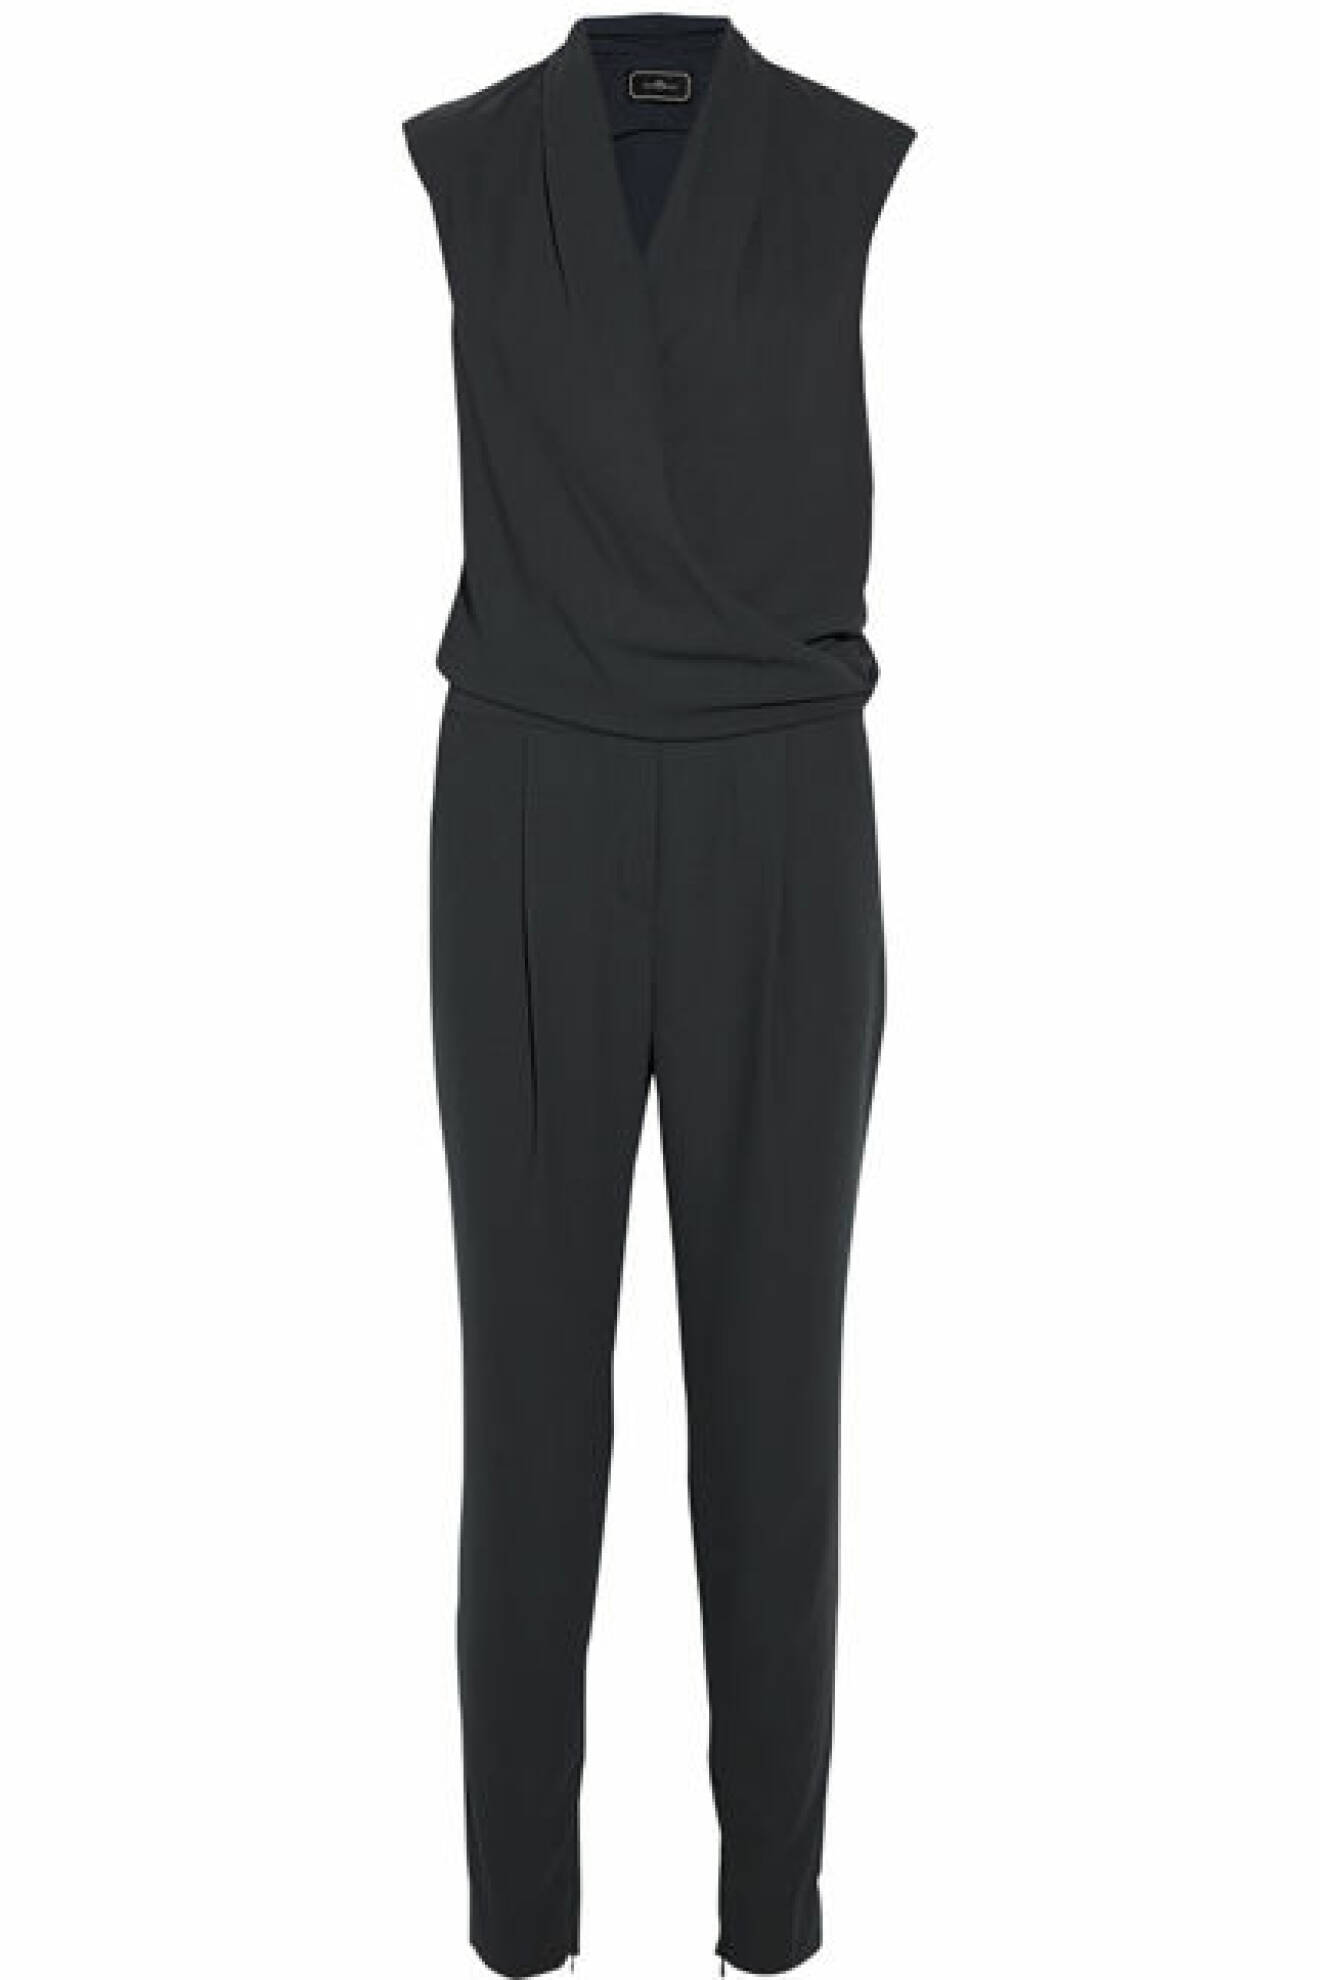 3. Jumpsuit, 2142, kr, By Malene Birger Net-a-porter.com